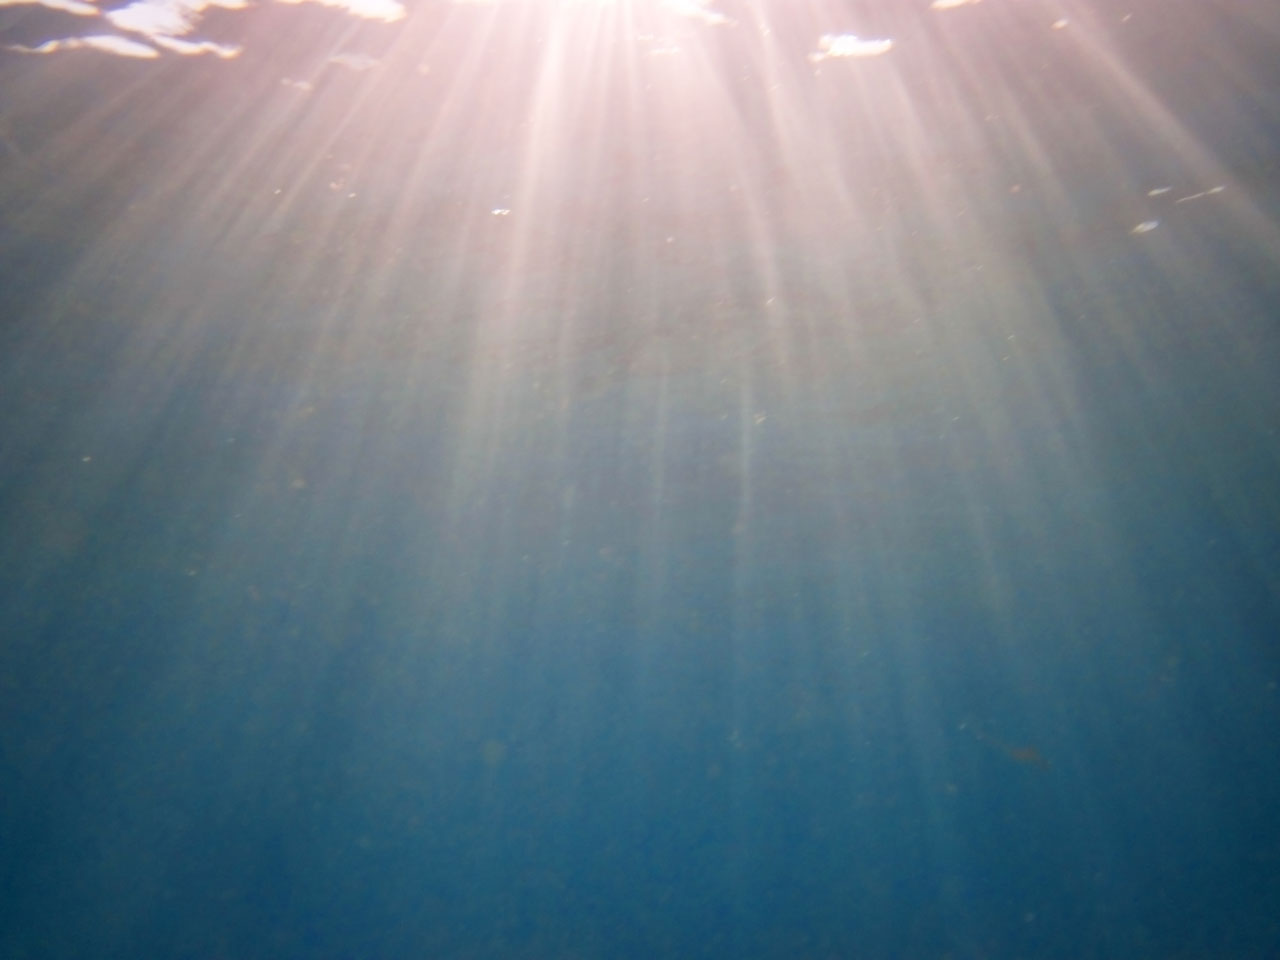 Underwater Light Rays